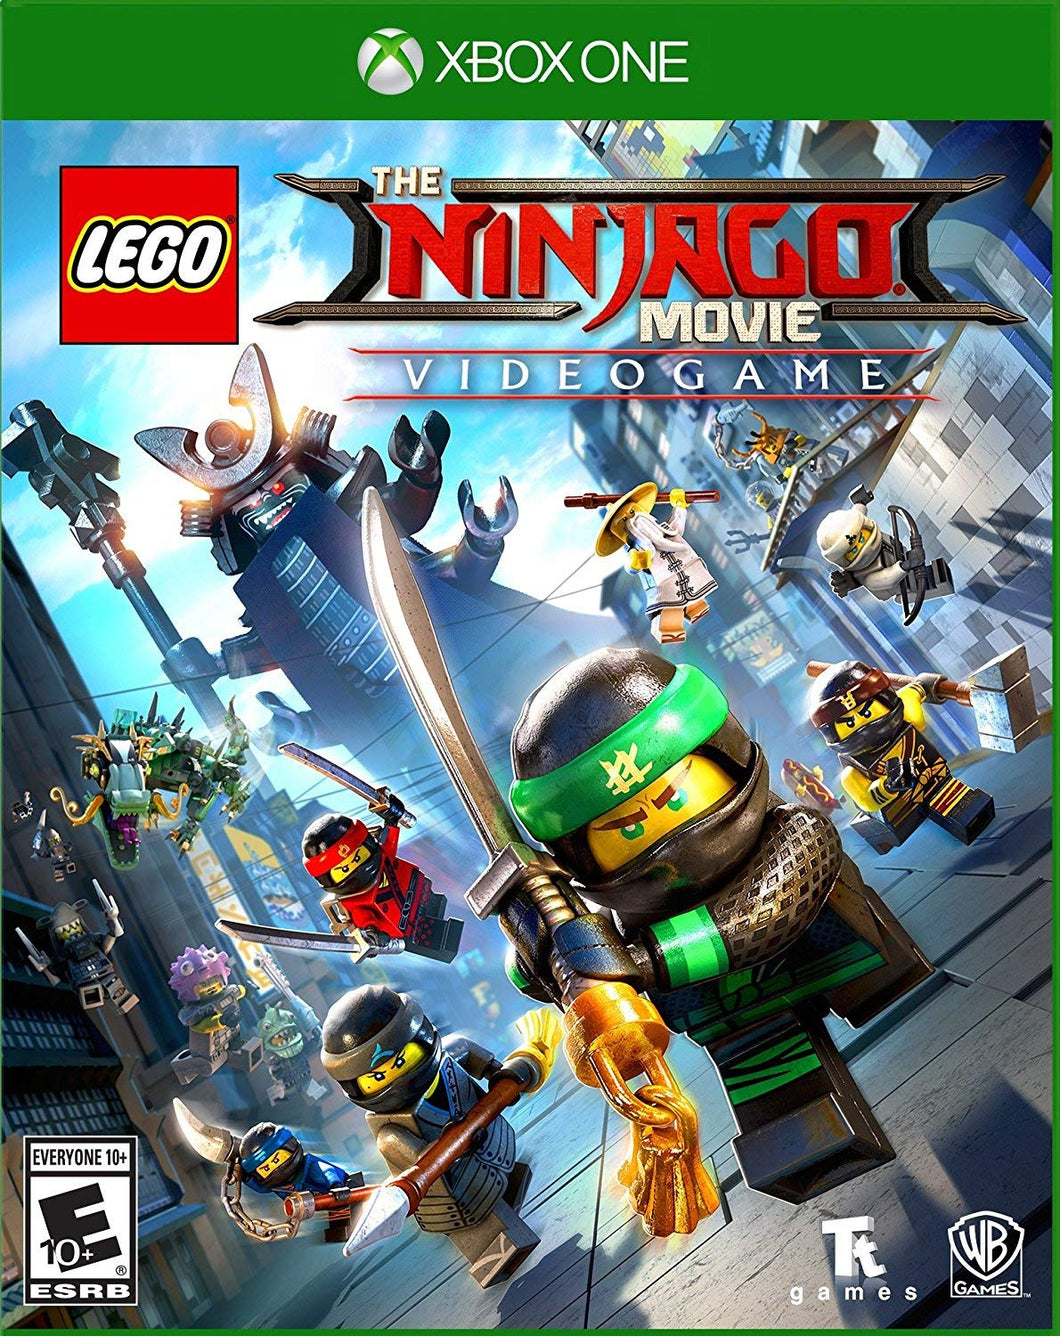 The Lego Ninjago Movie Videogame